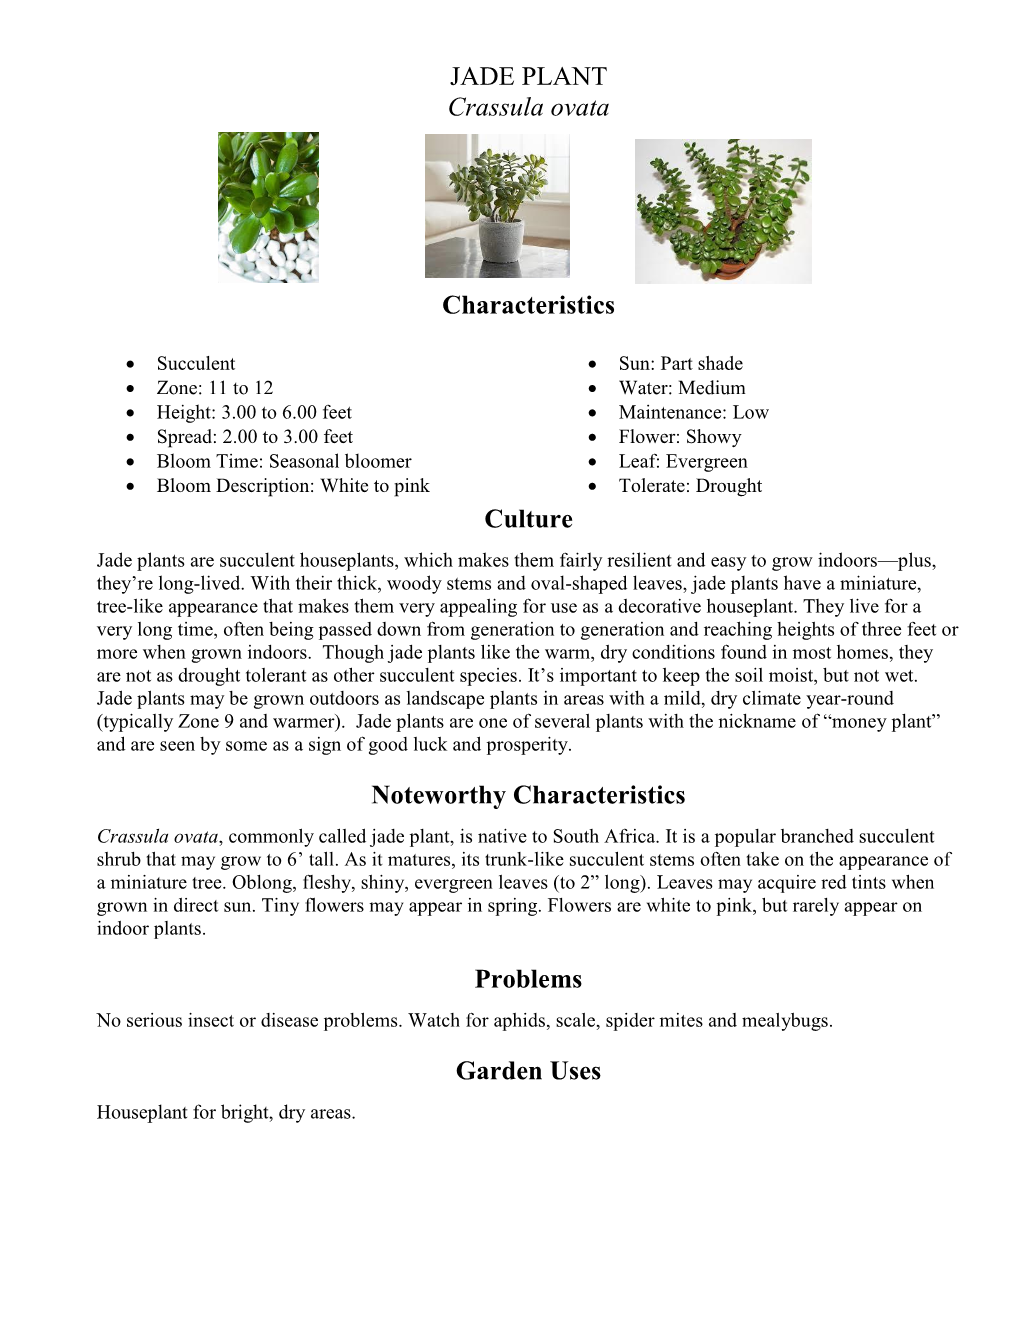 JADE PLANT Crassula Ovata Characteristics Culture Noteworthy Characteristics Problems Garden Uses